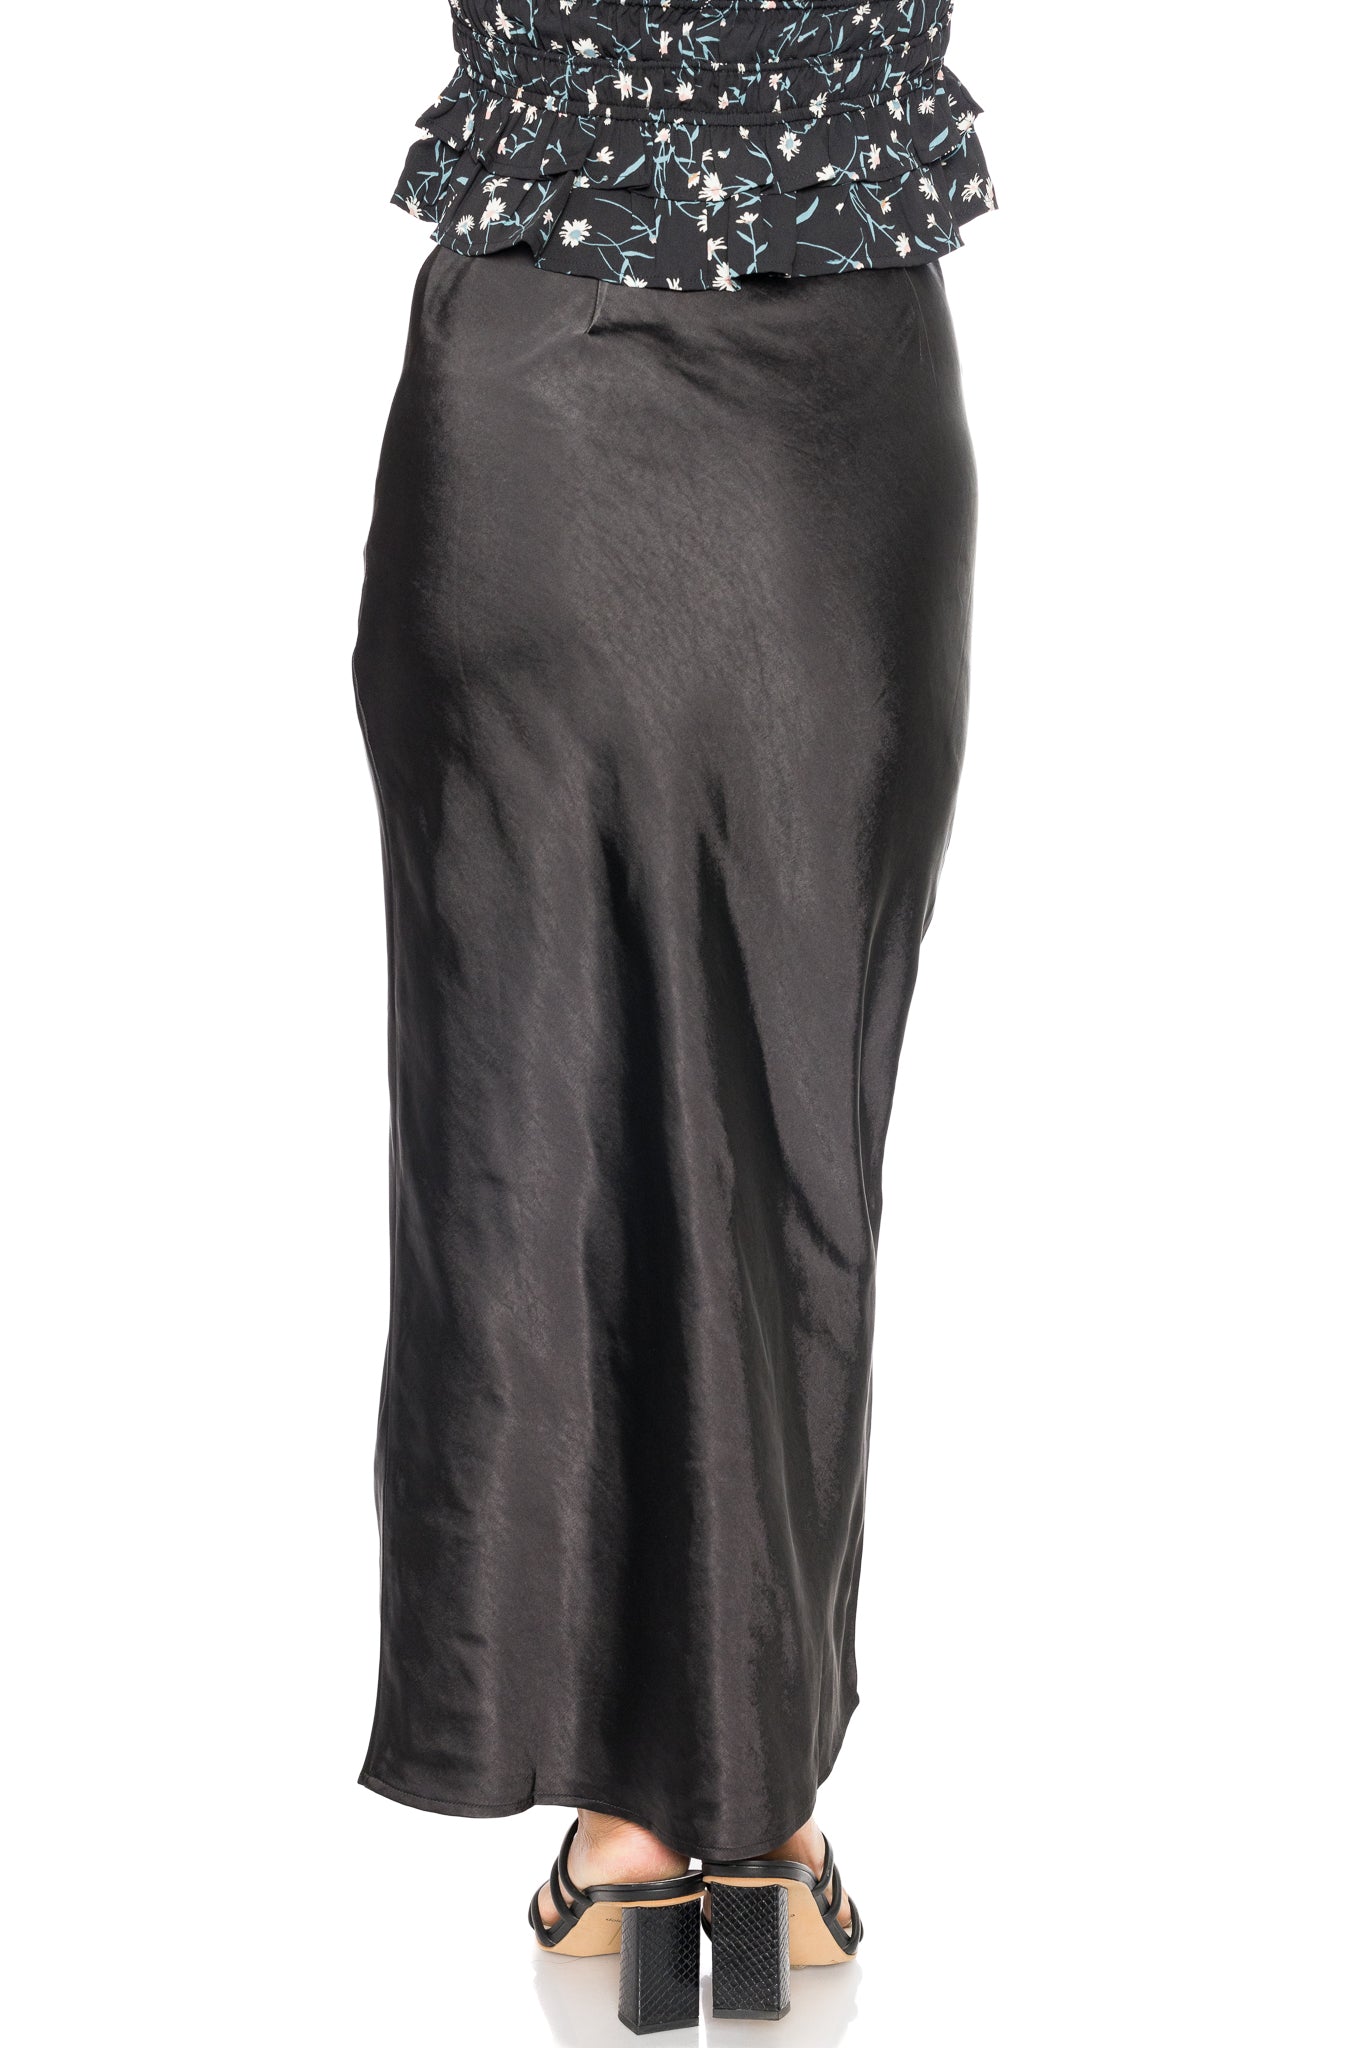 Hayek Slit Maxi Skirt by Greylin